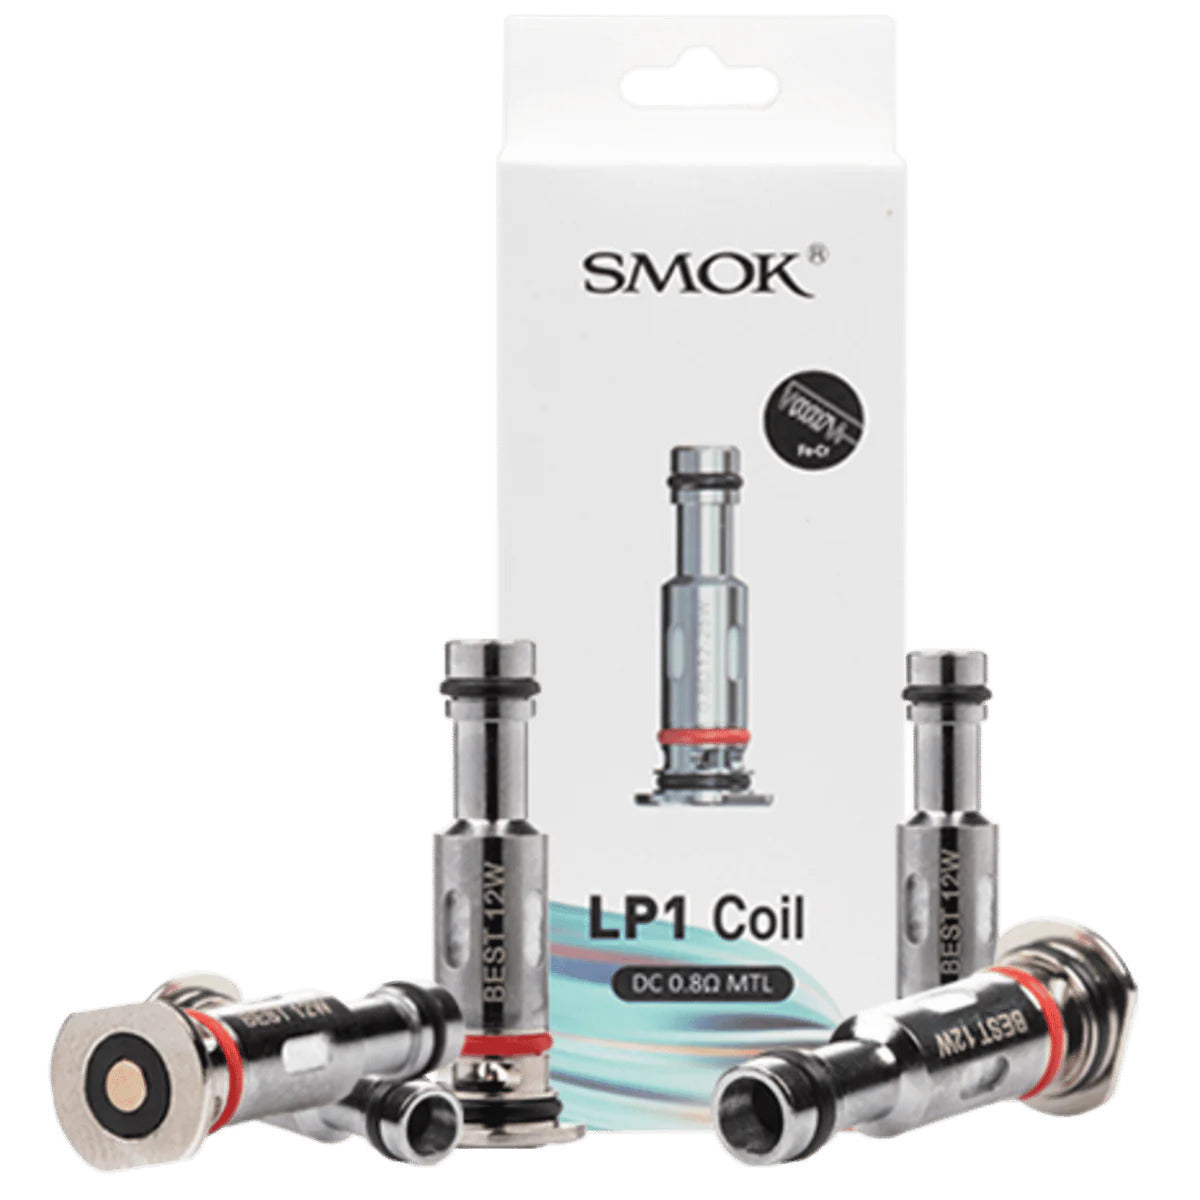 Lowest-price SMOK_LP1_series_coils_5pcs_pack